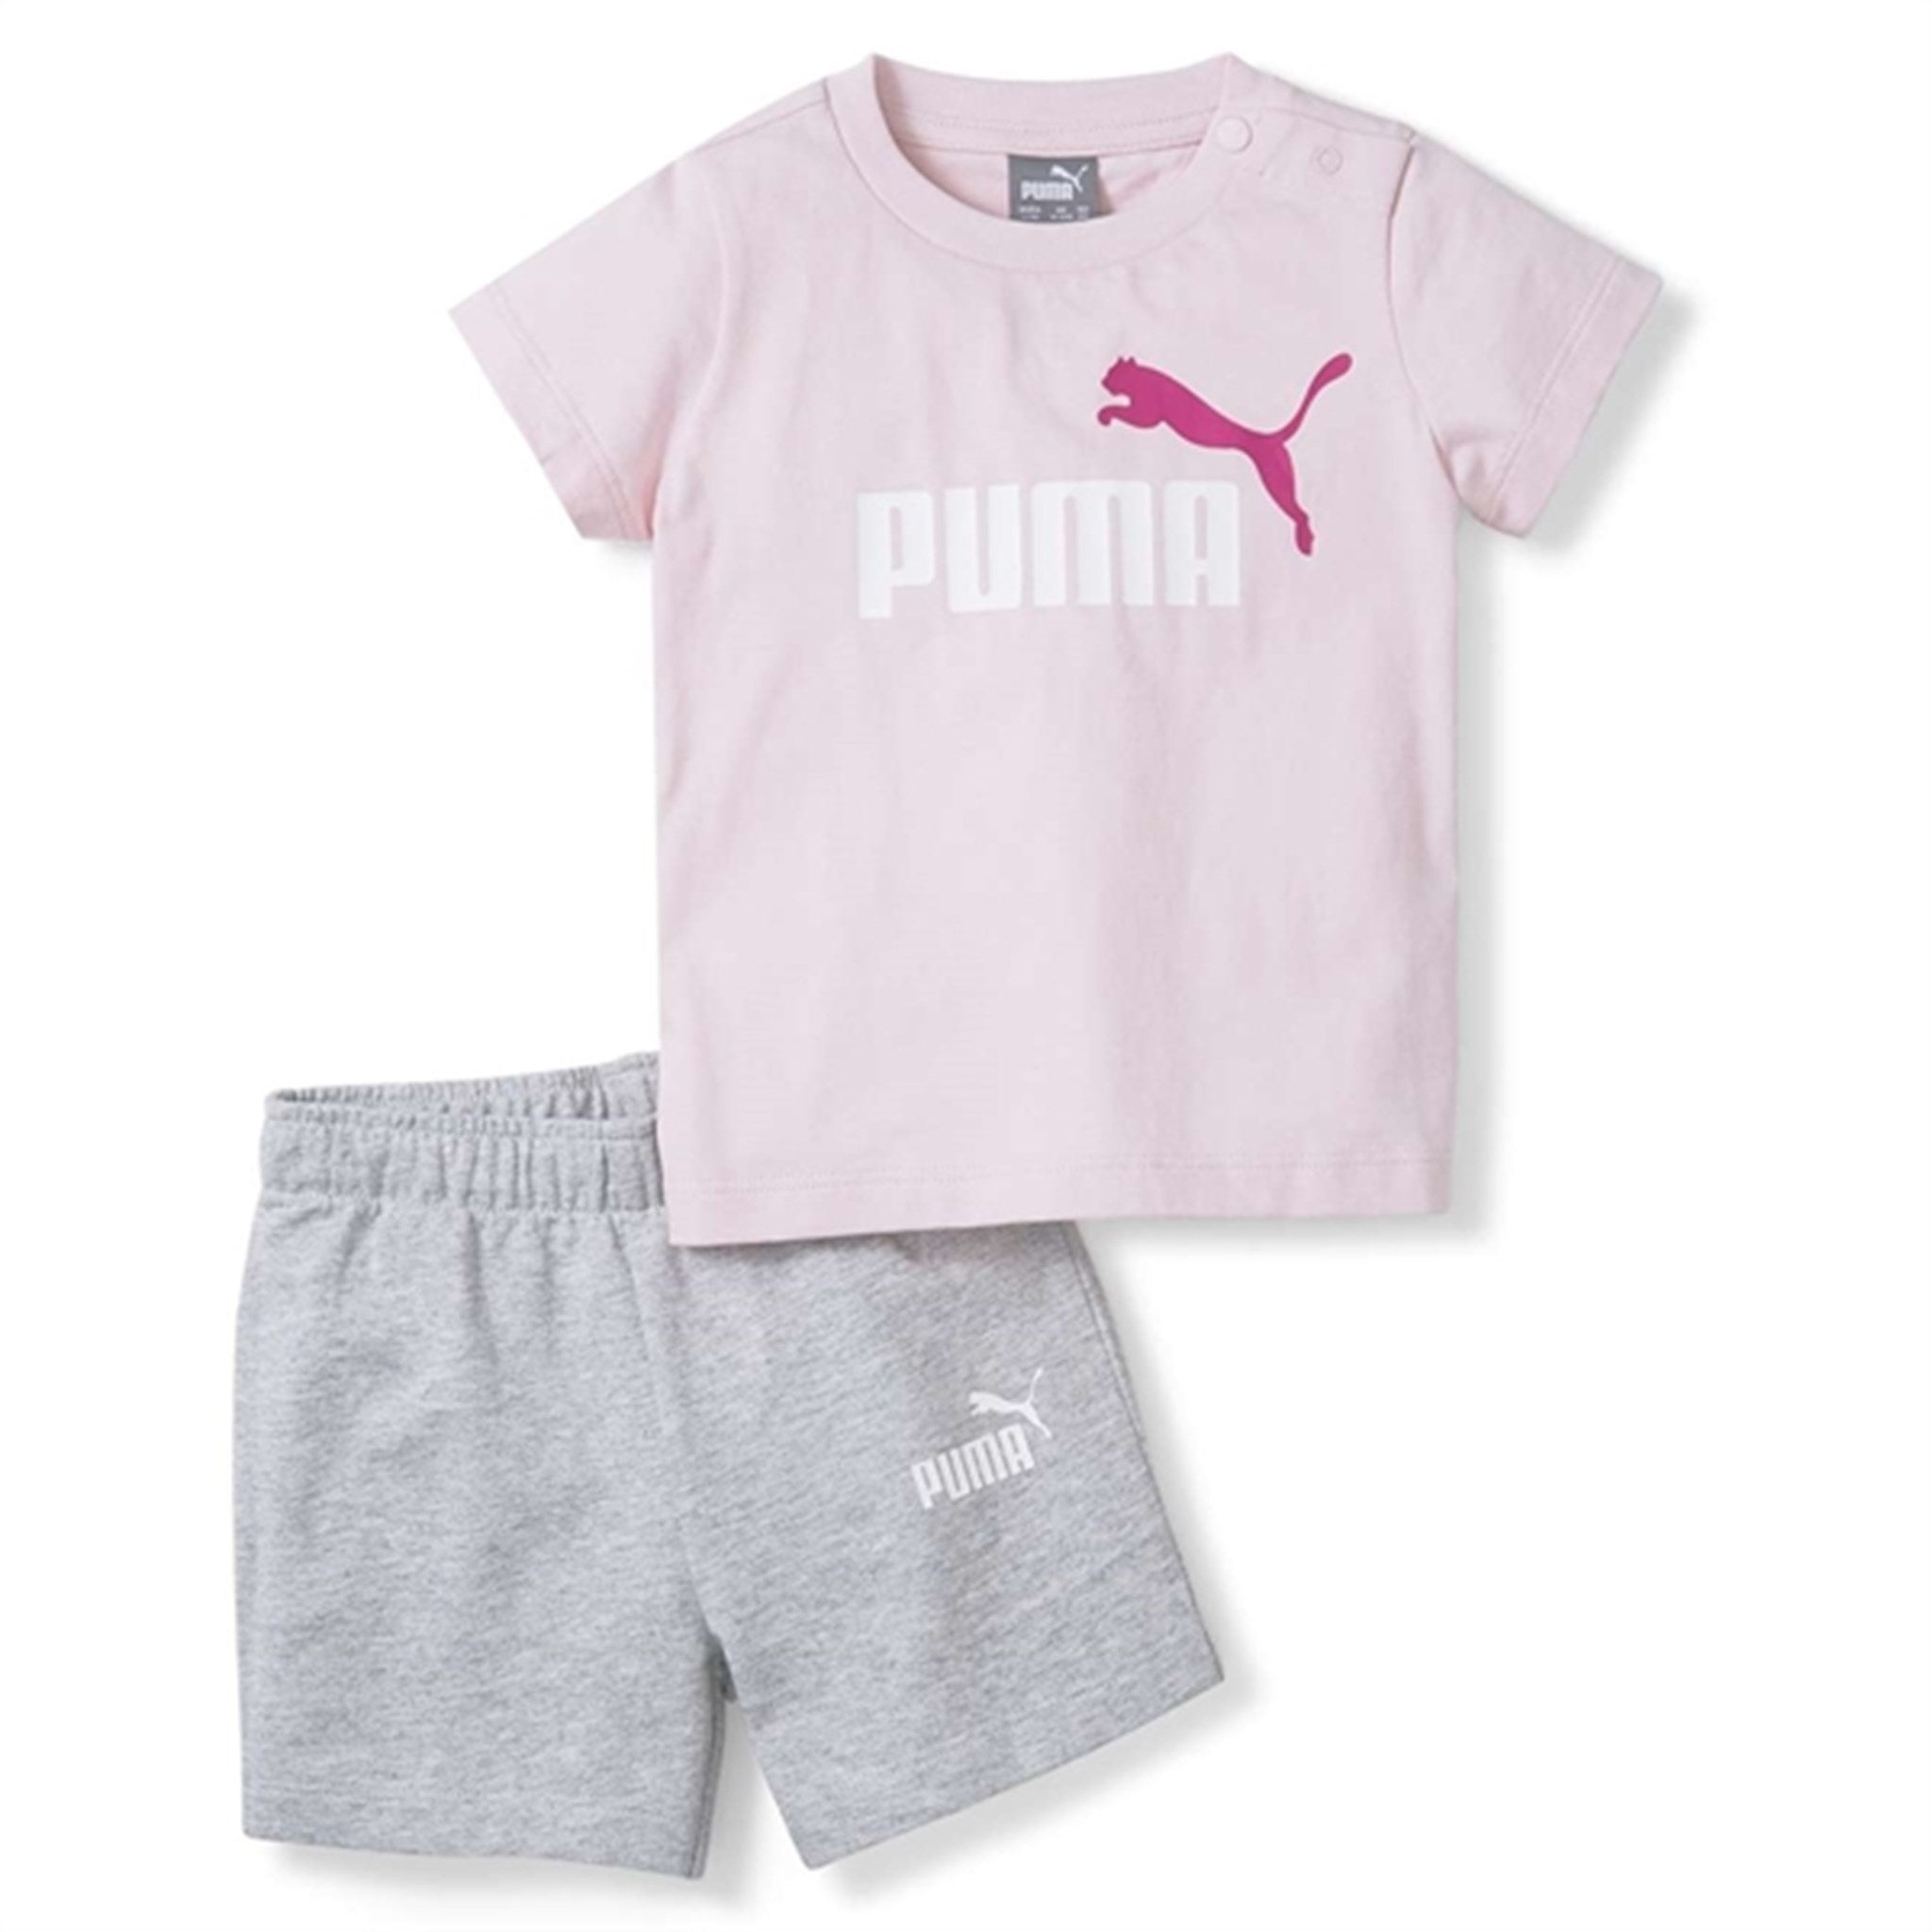 Puma Minicats Tee & Shorts set Pink 2